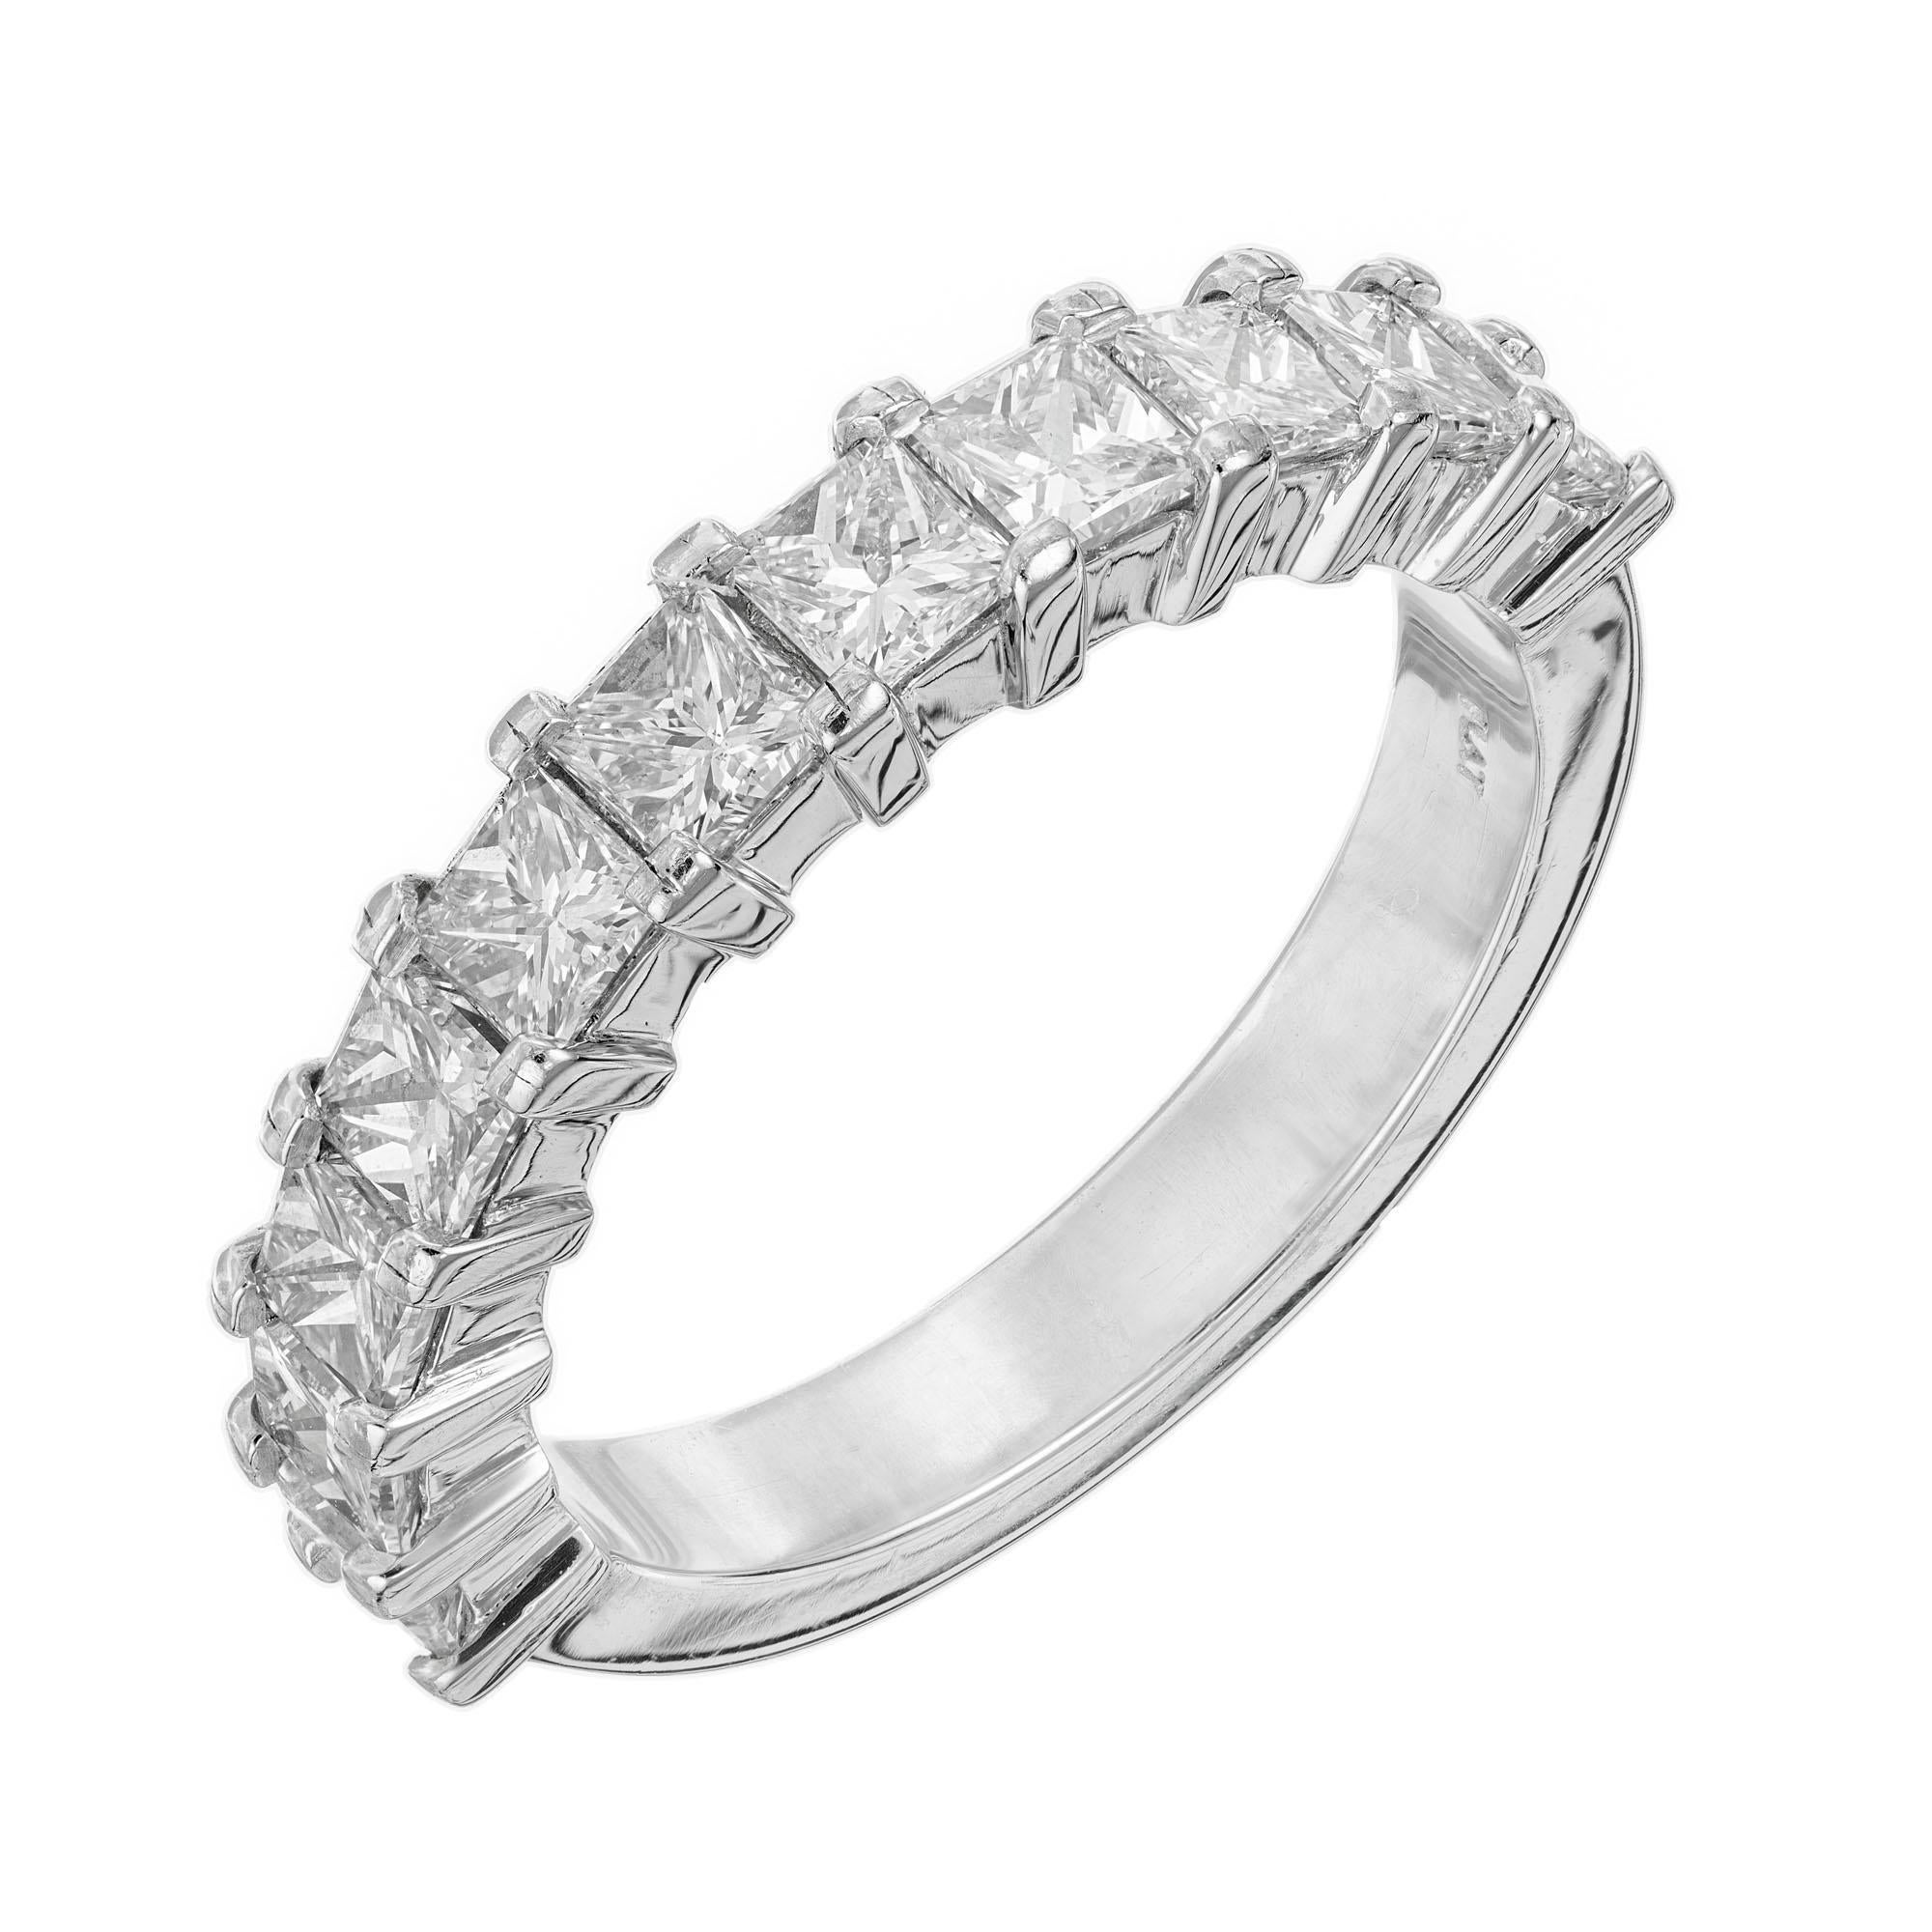 Peter Suchy 1.75 Carat Princess Cut Diamond Platinum Wedding Band Ring For Sale